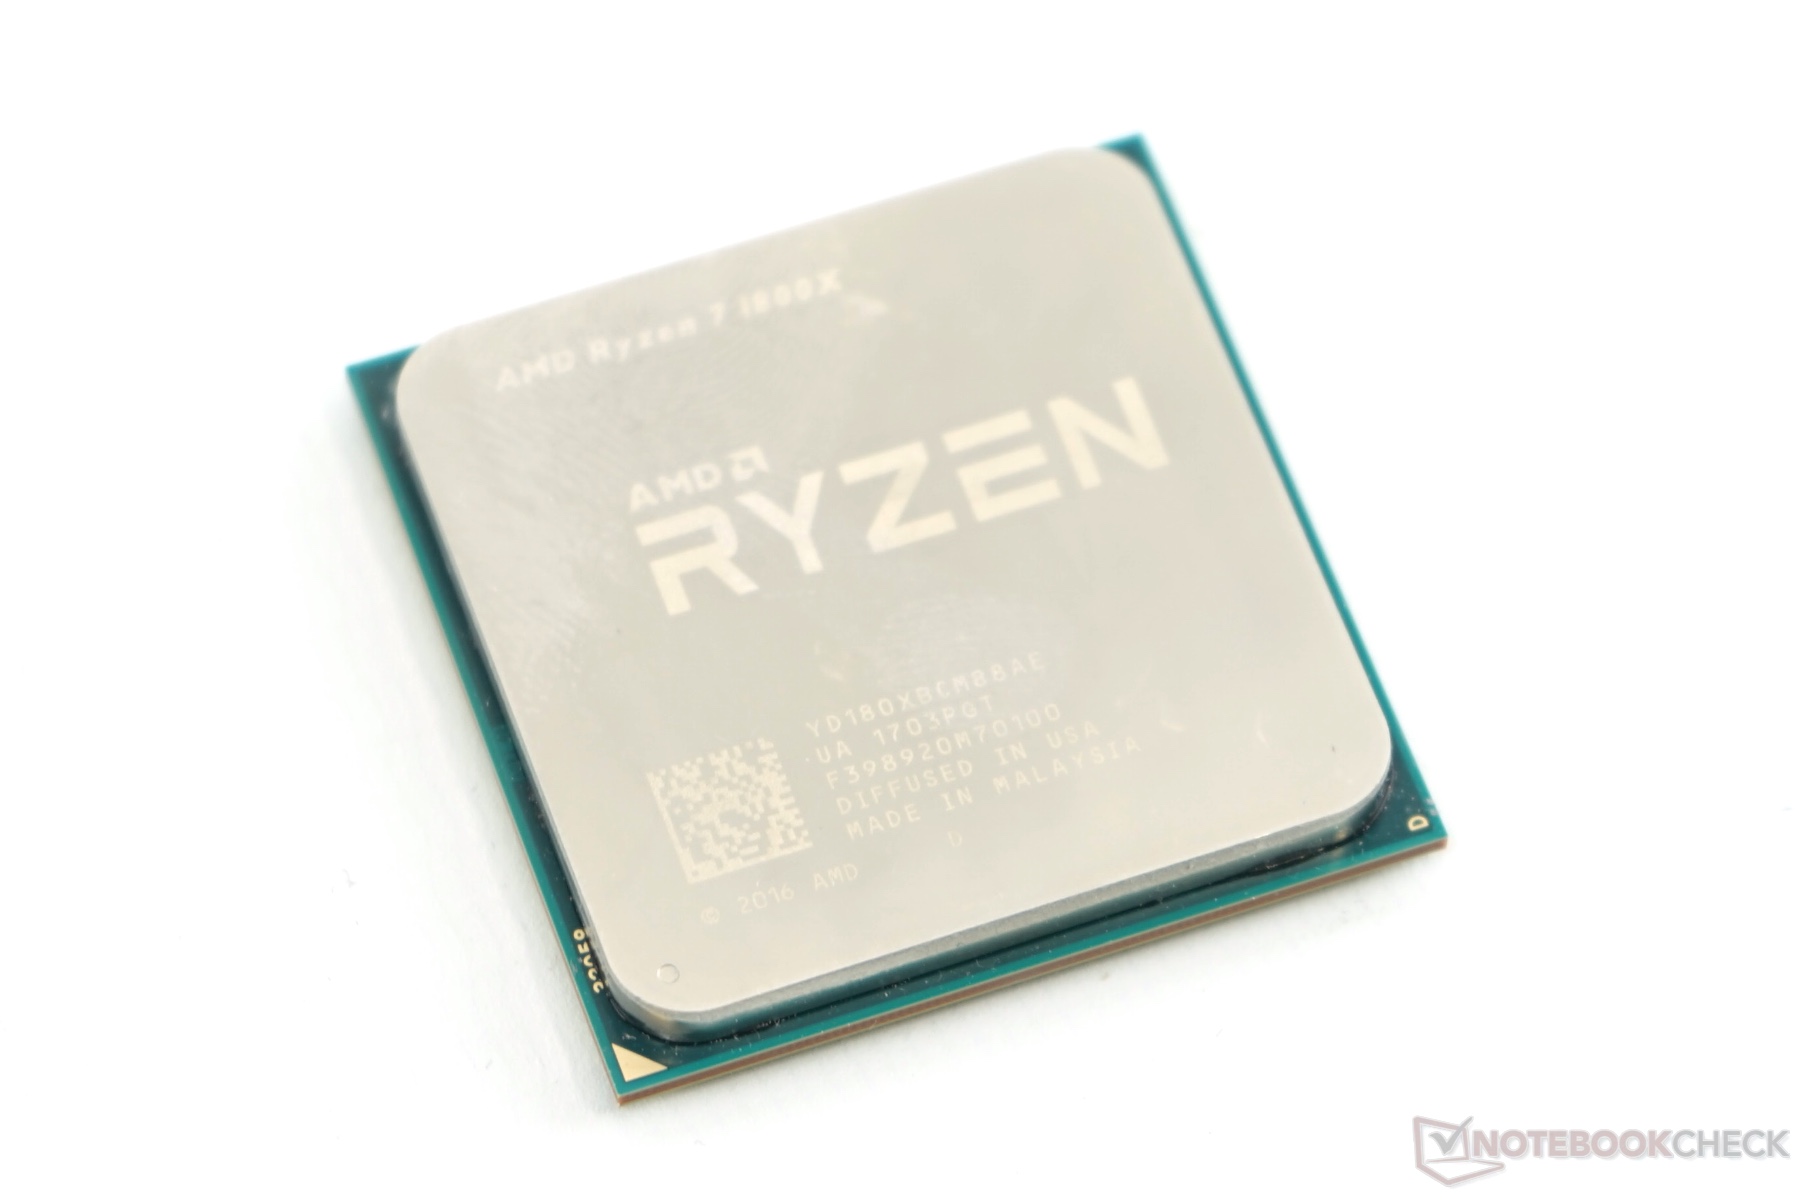 AMD Ryzen 7 1700X SoC - Benchmarks and Specs - NotebookCheck.net Tech